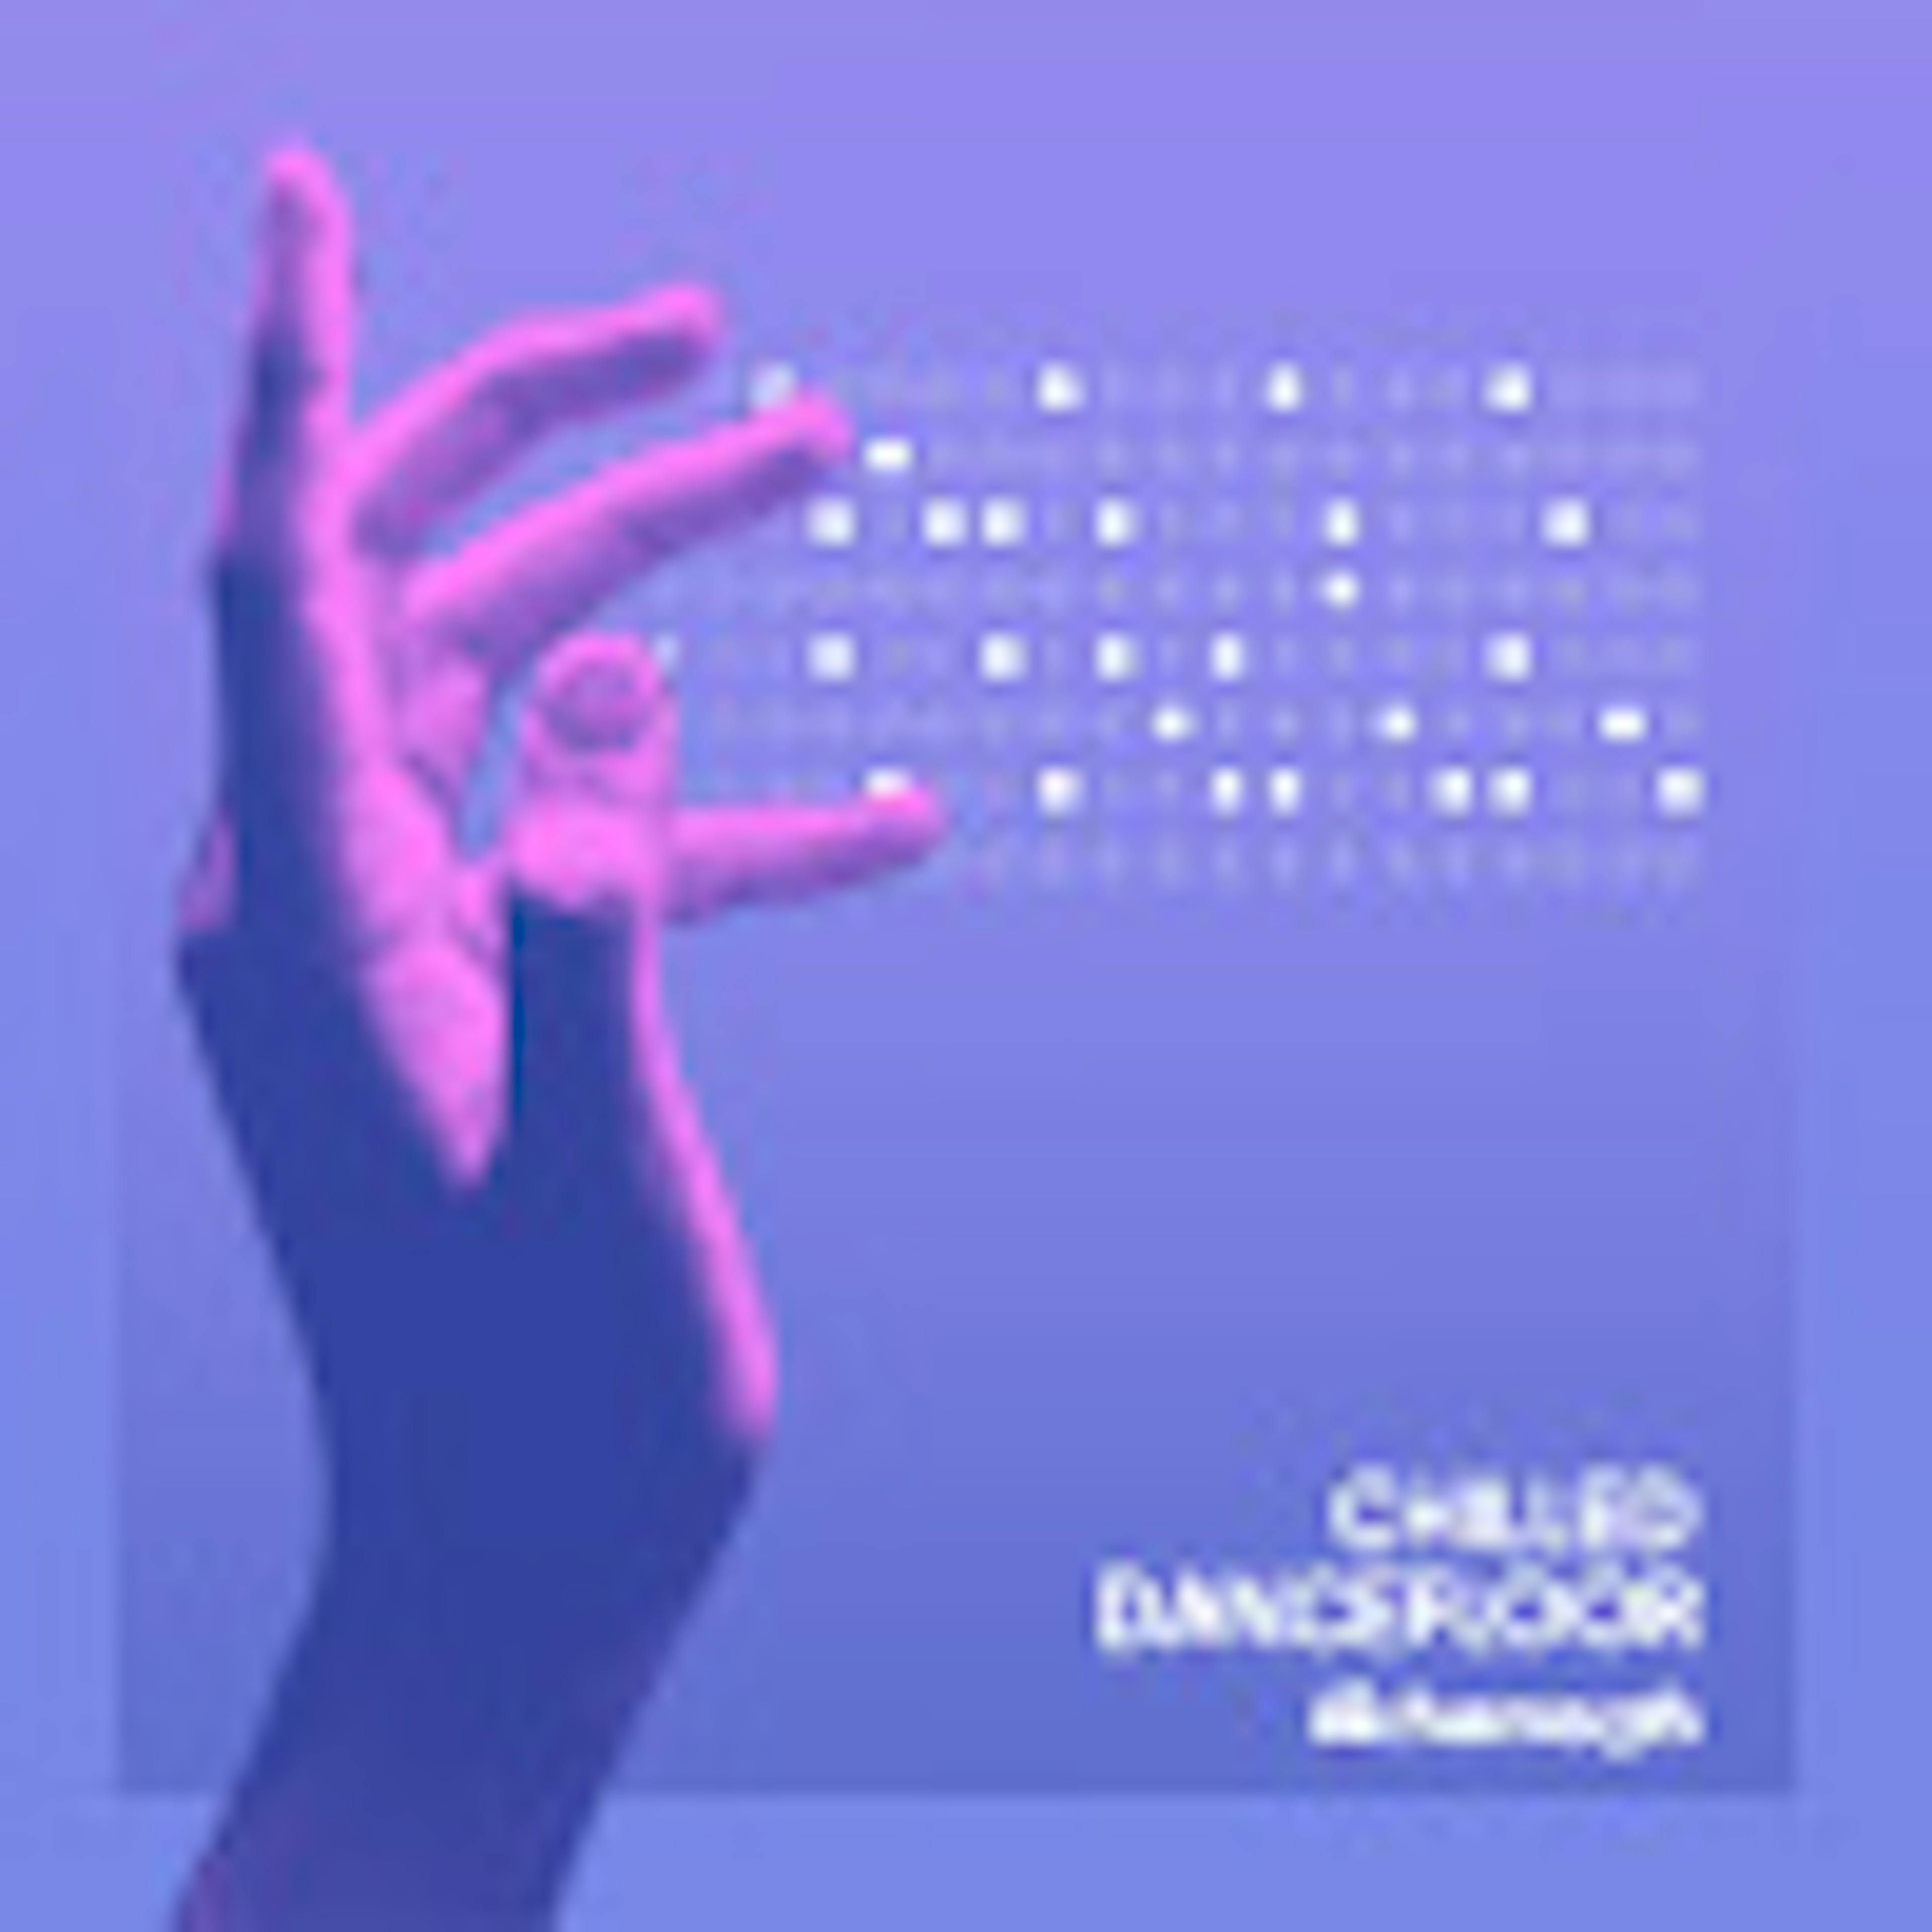 Chilled Dancefloor album cover